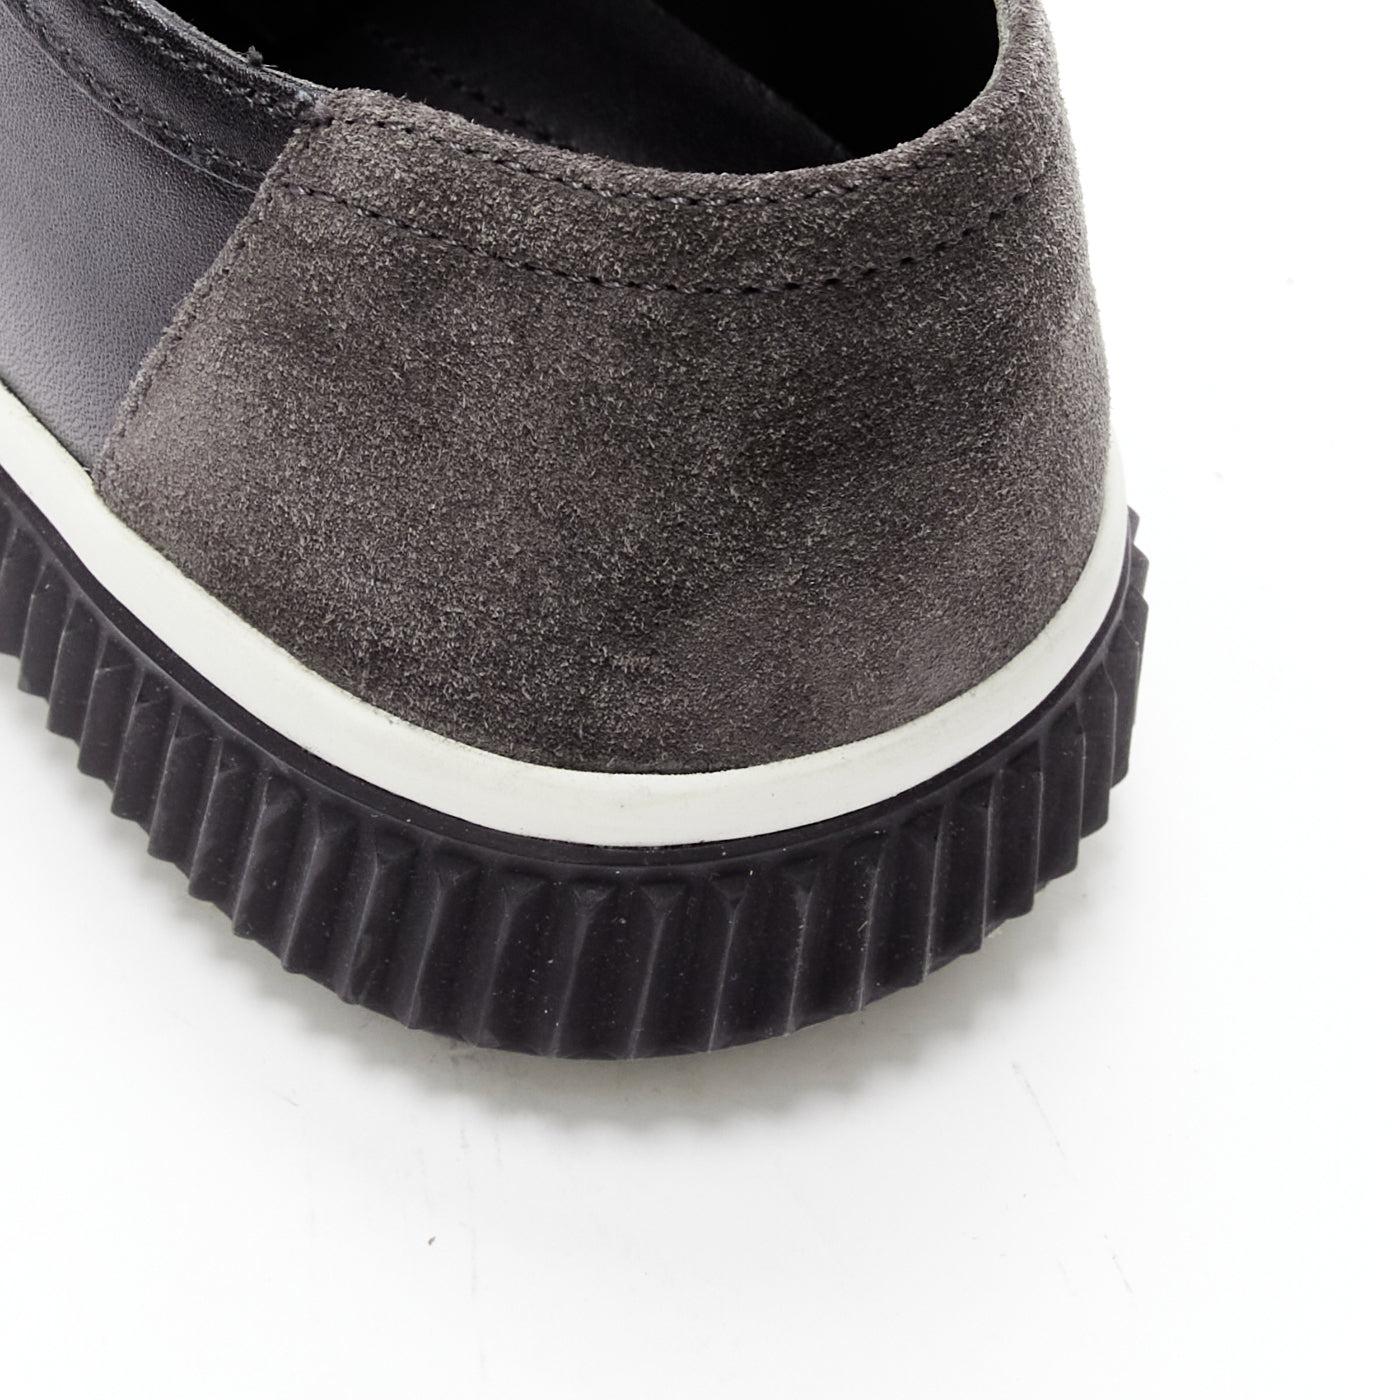 PRADA Stratus black grey suede leather low top sneakers UK5.5 EU39.5 For Sale 3